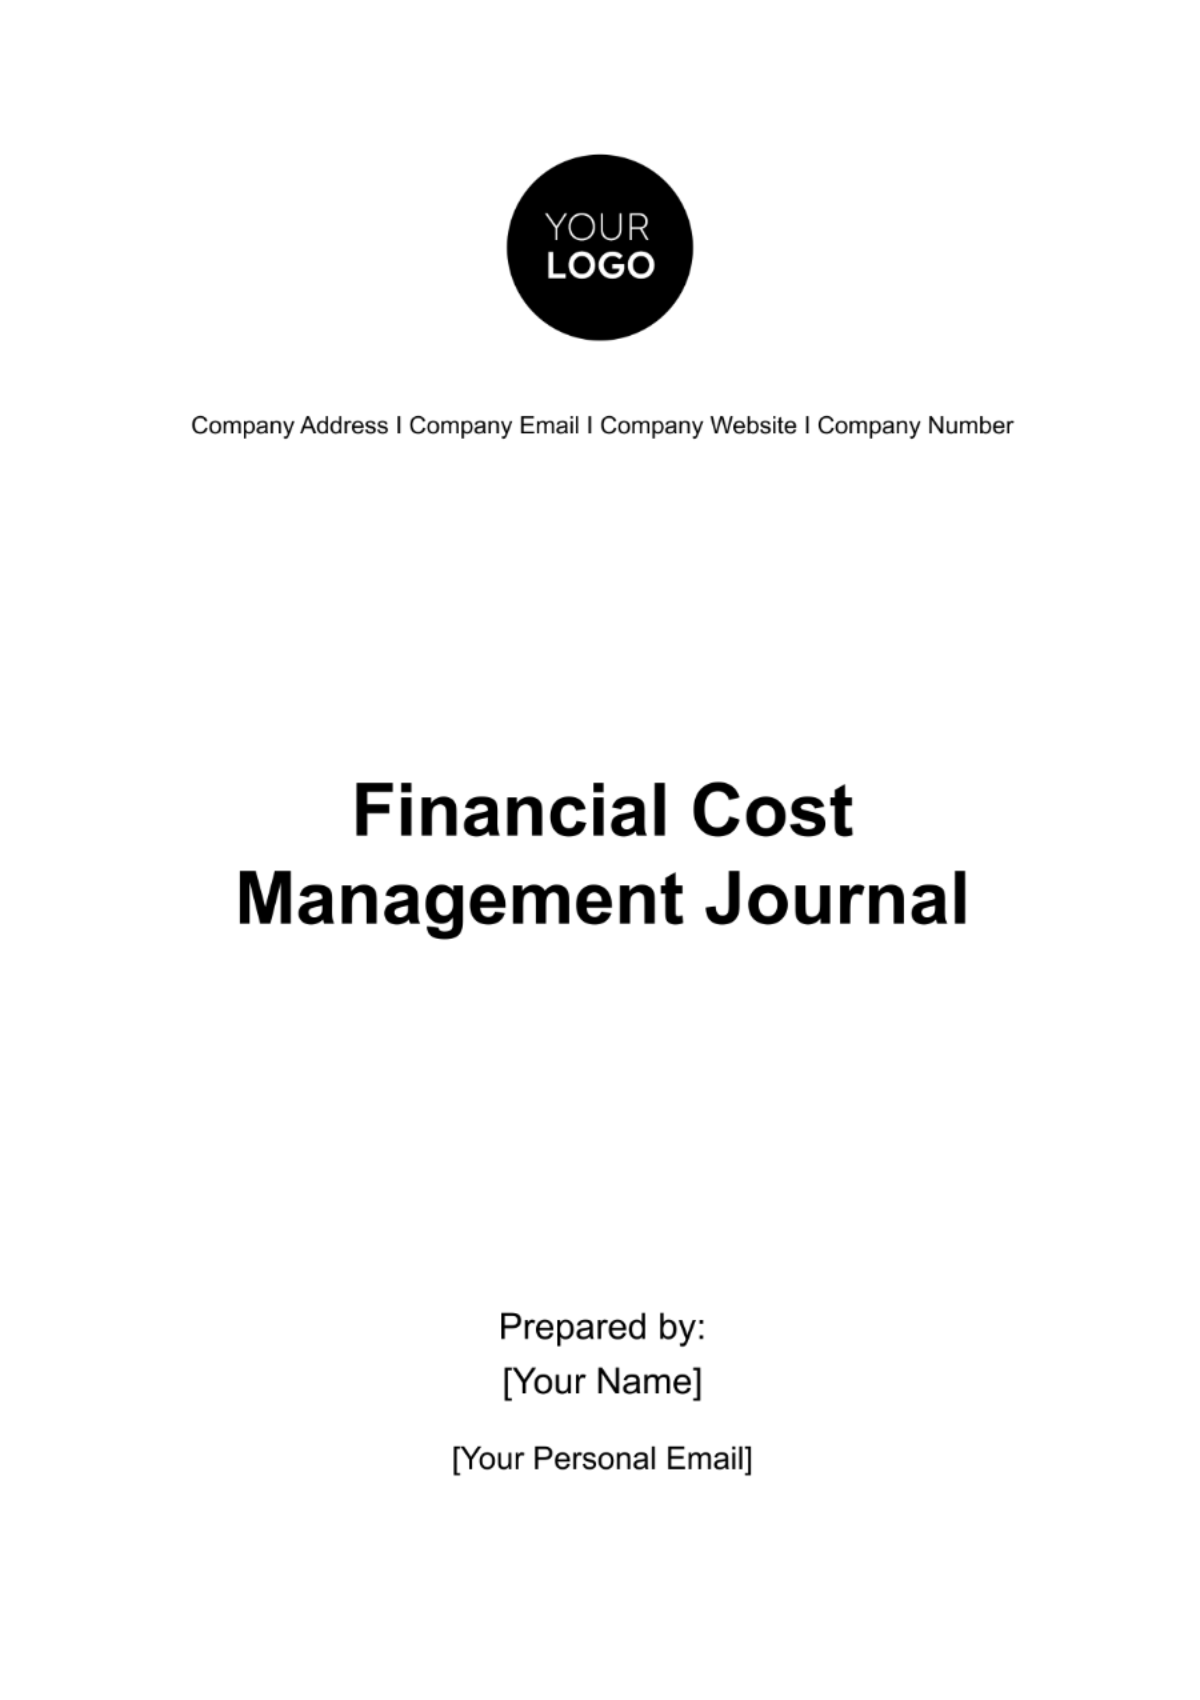 Financial Cost Management Journal Template